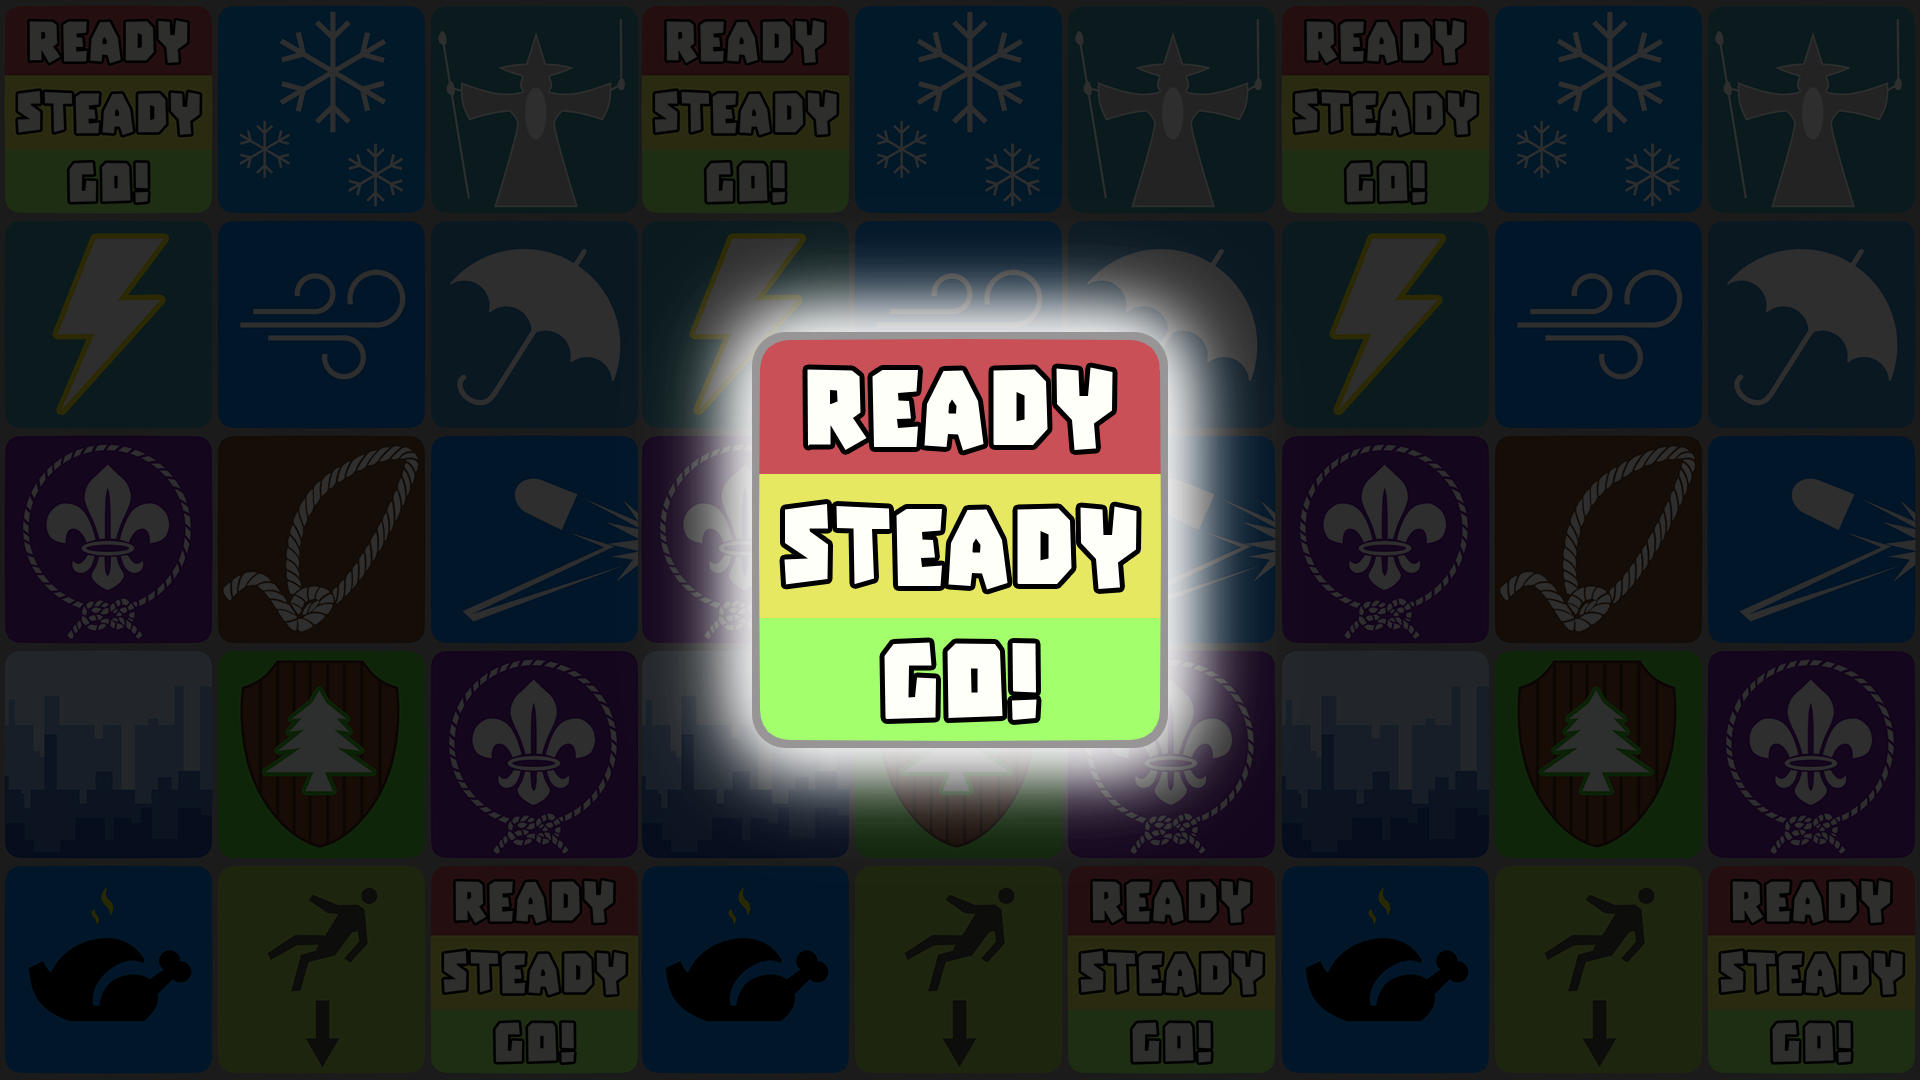 Icon for Ready, steady, GO!